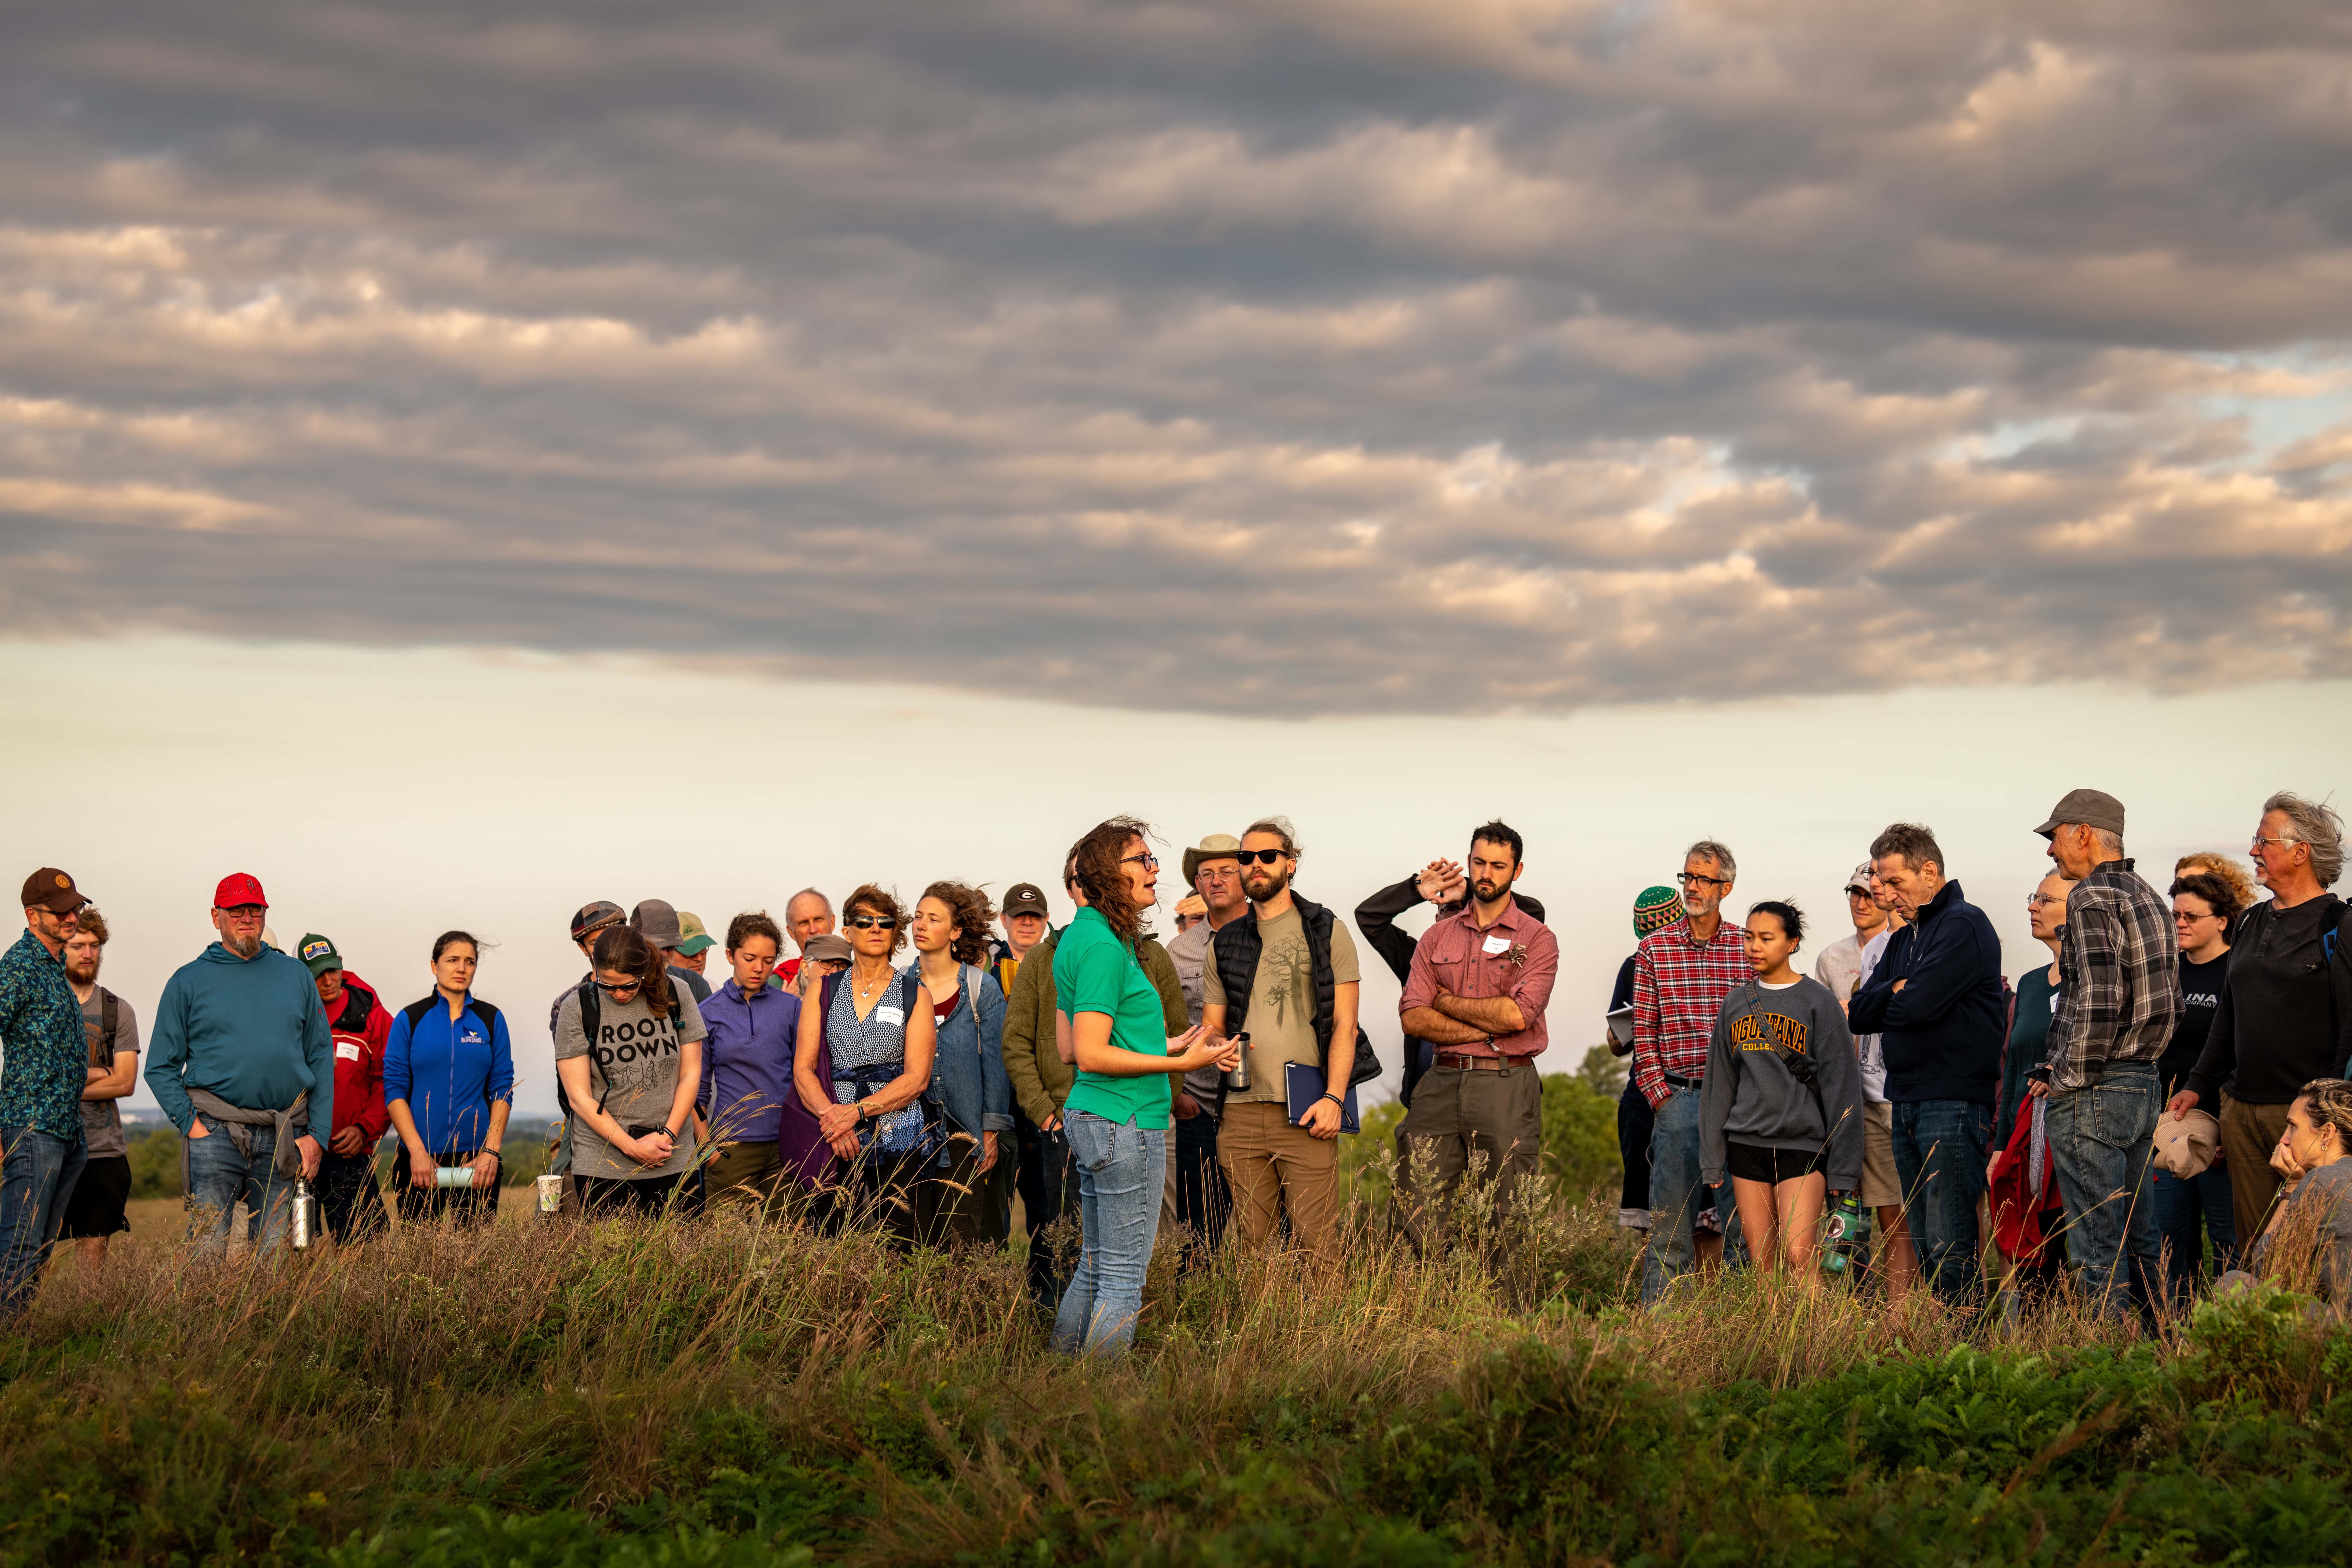 Aubrey Streit Krug, The Land Institute's director of Ecospheric Studies, talks of the prairie as she leads a sunrise prairie walk that is part of the institute's annual Prairie Festival.